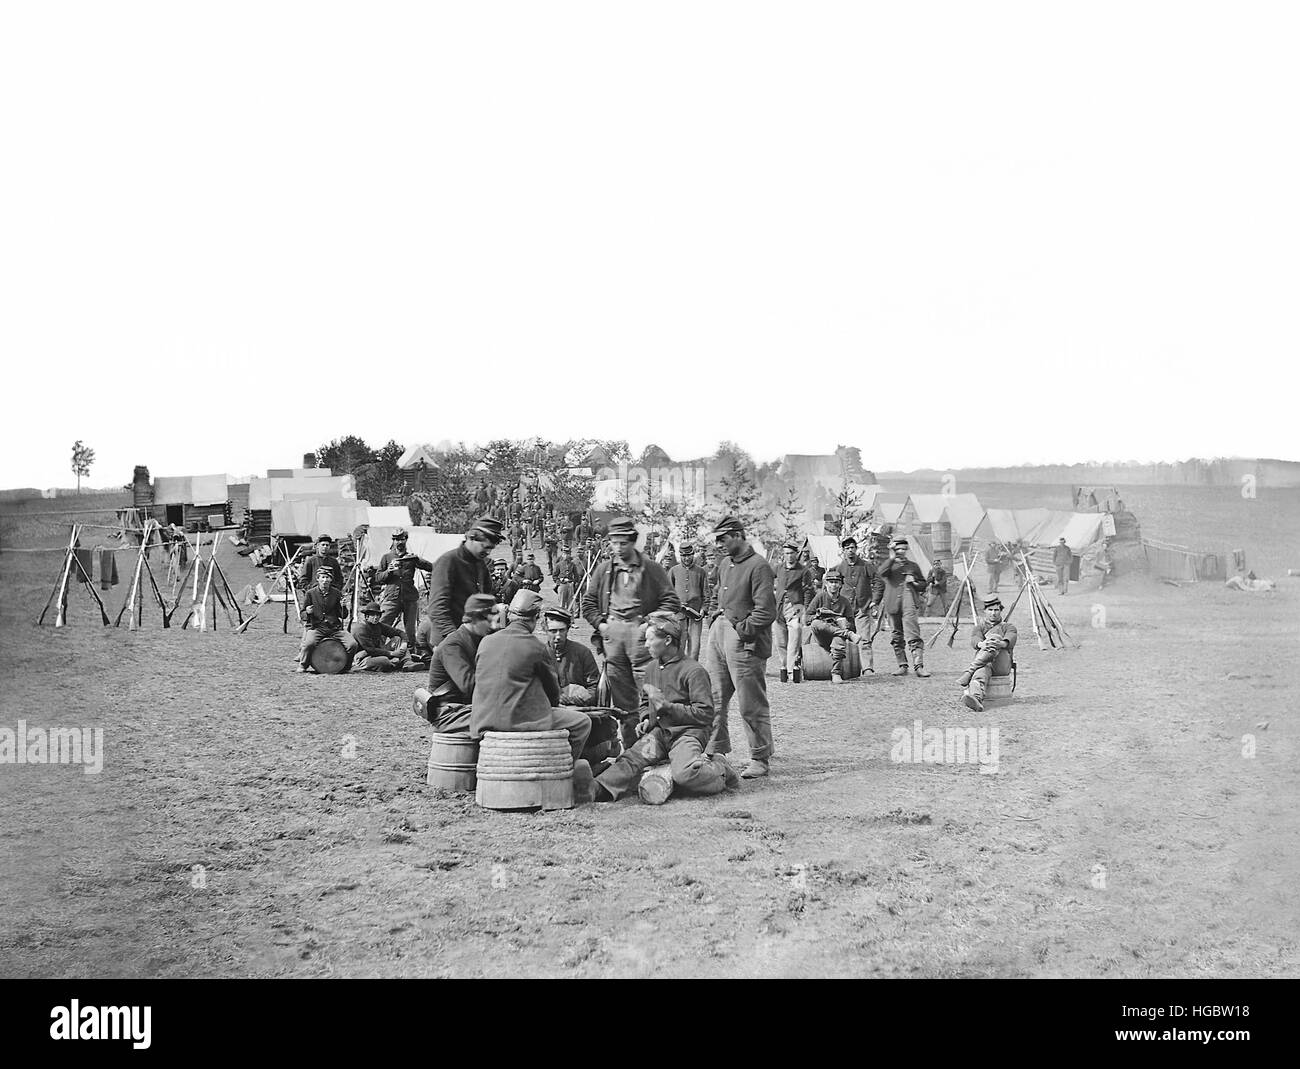 Camp scene during the American Civil War. Stock Photo